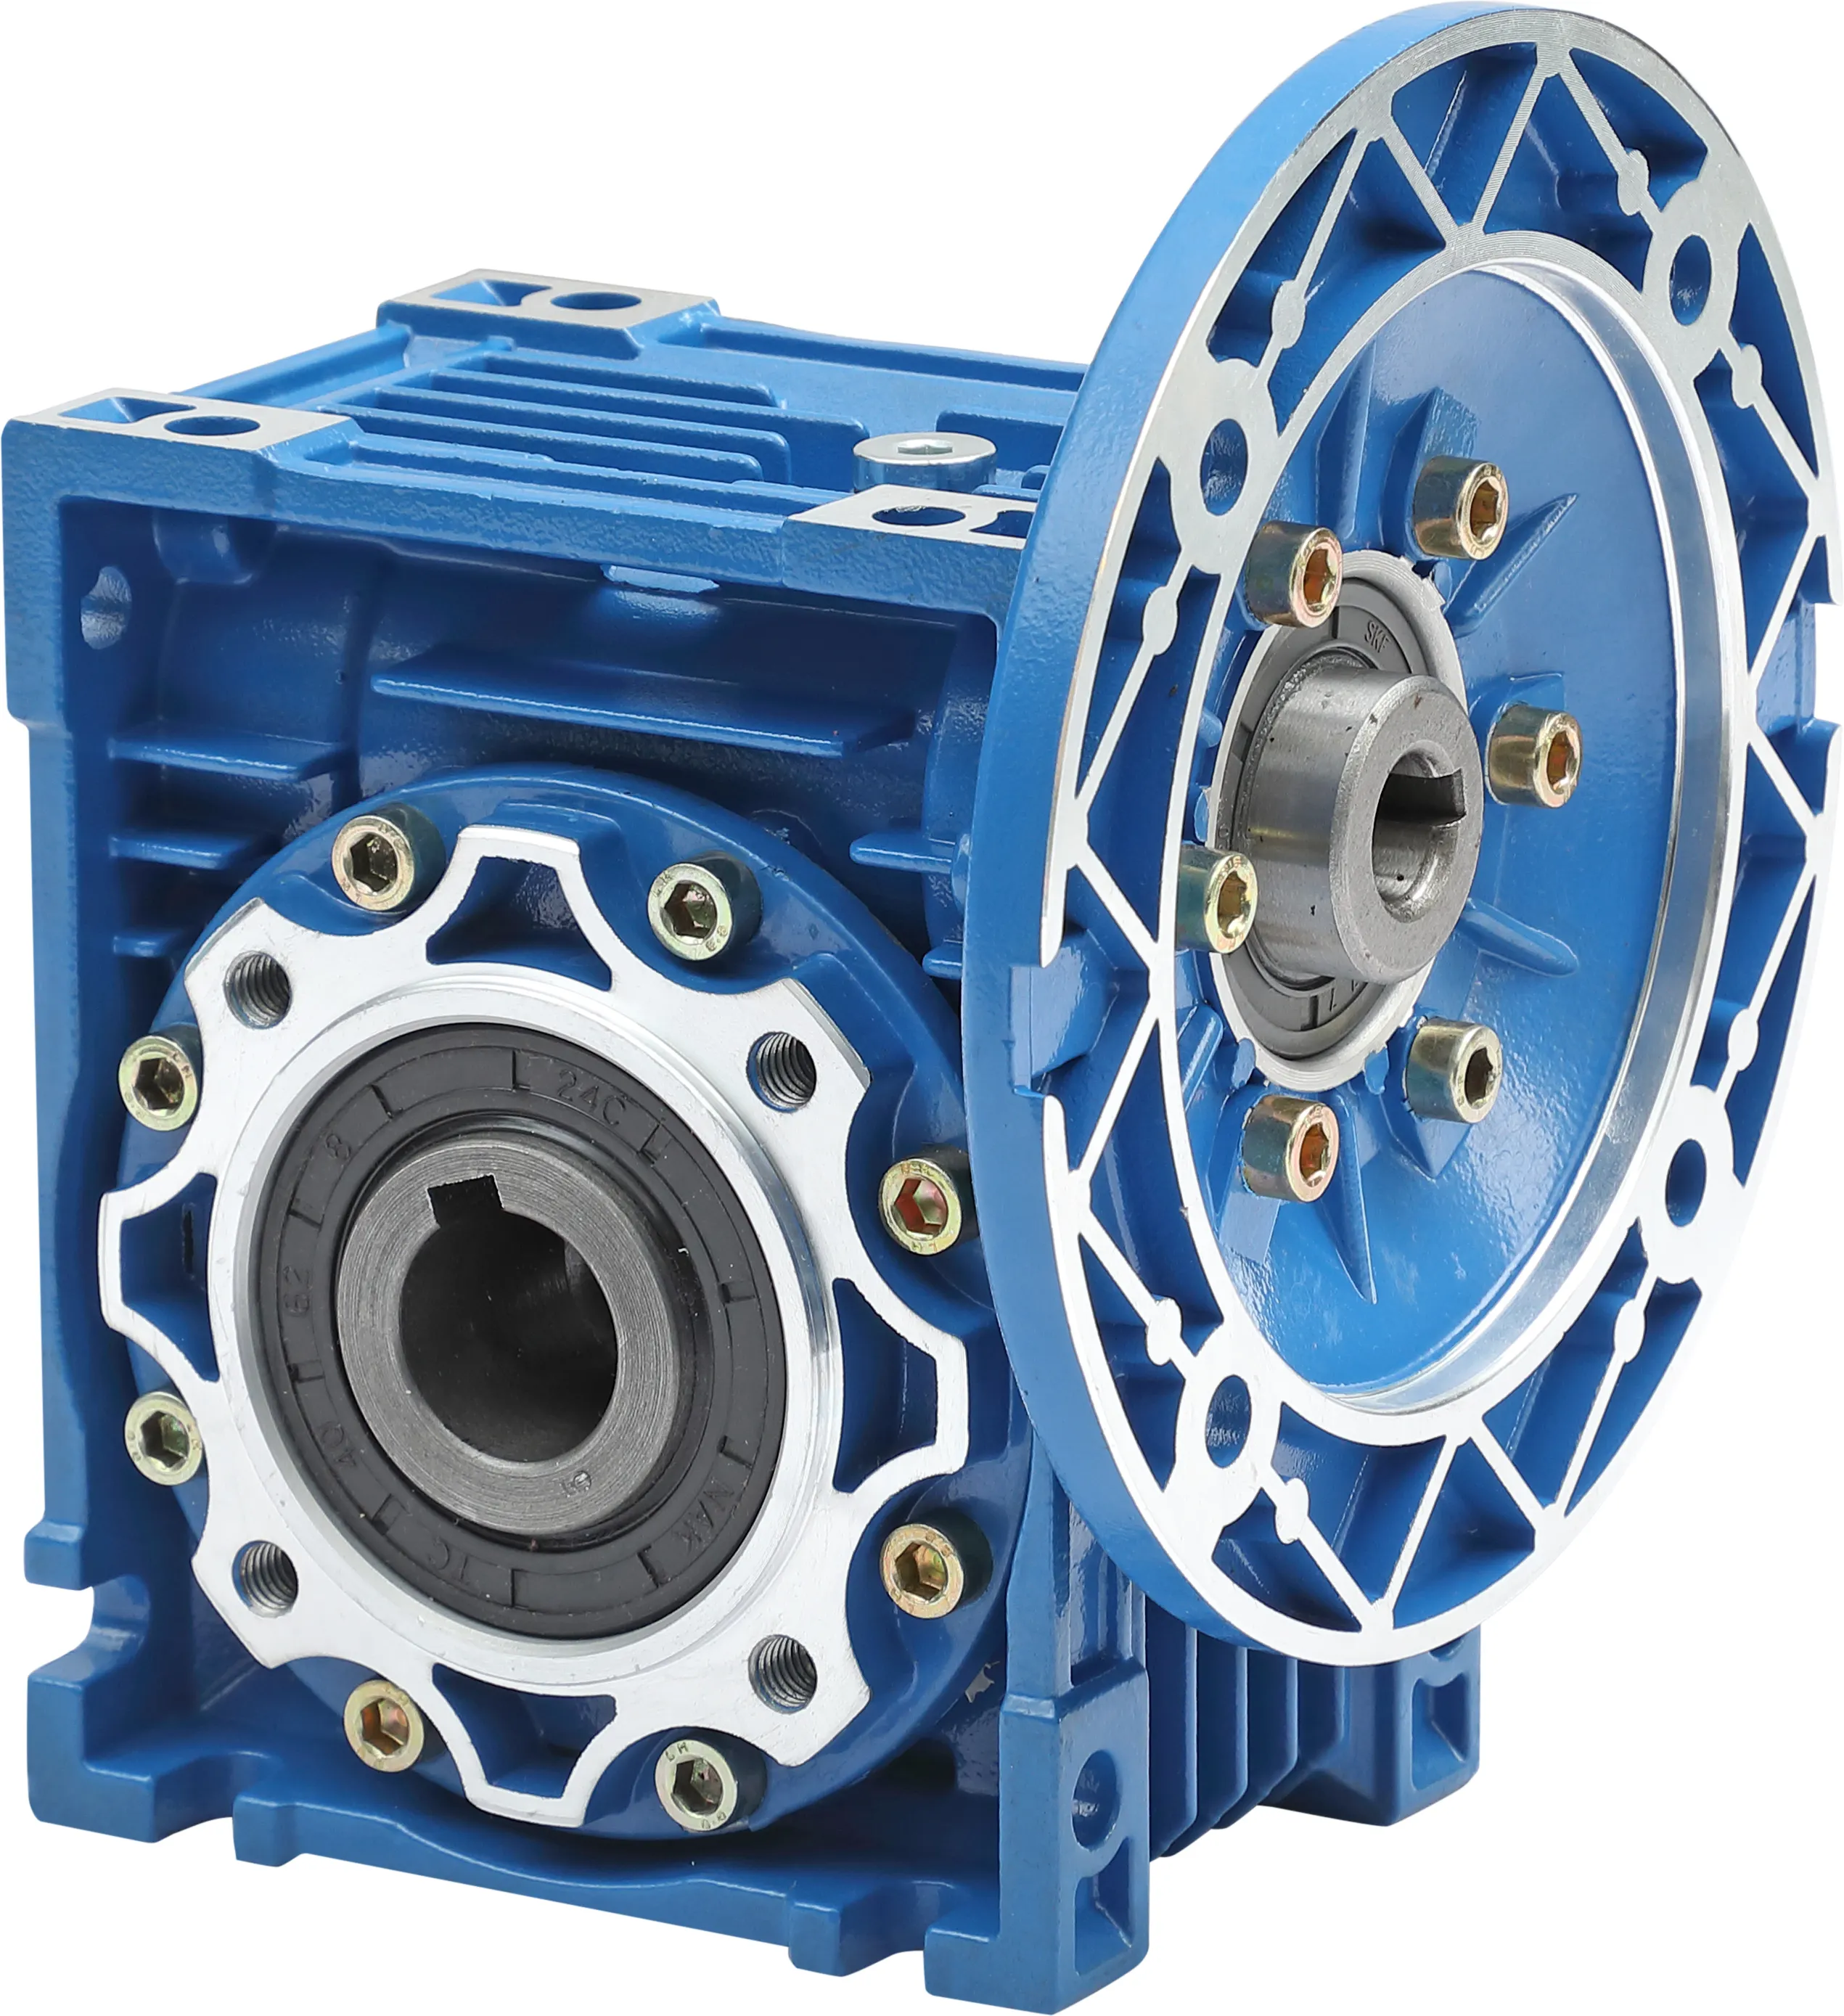 mechanical speed variator Rv Reducer gearbox gear speed reducer worm gear speed reducer